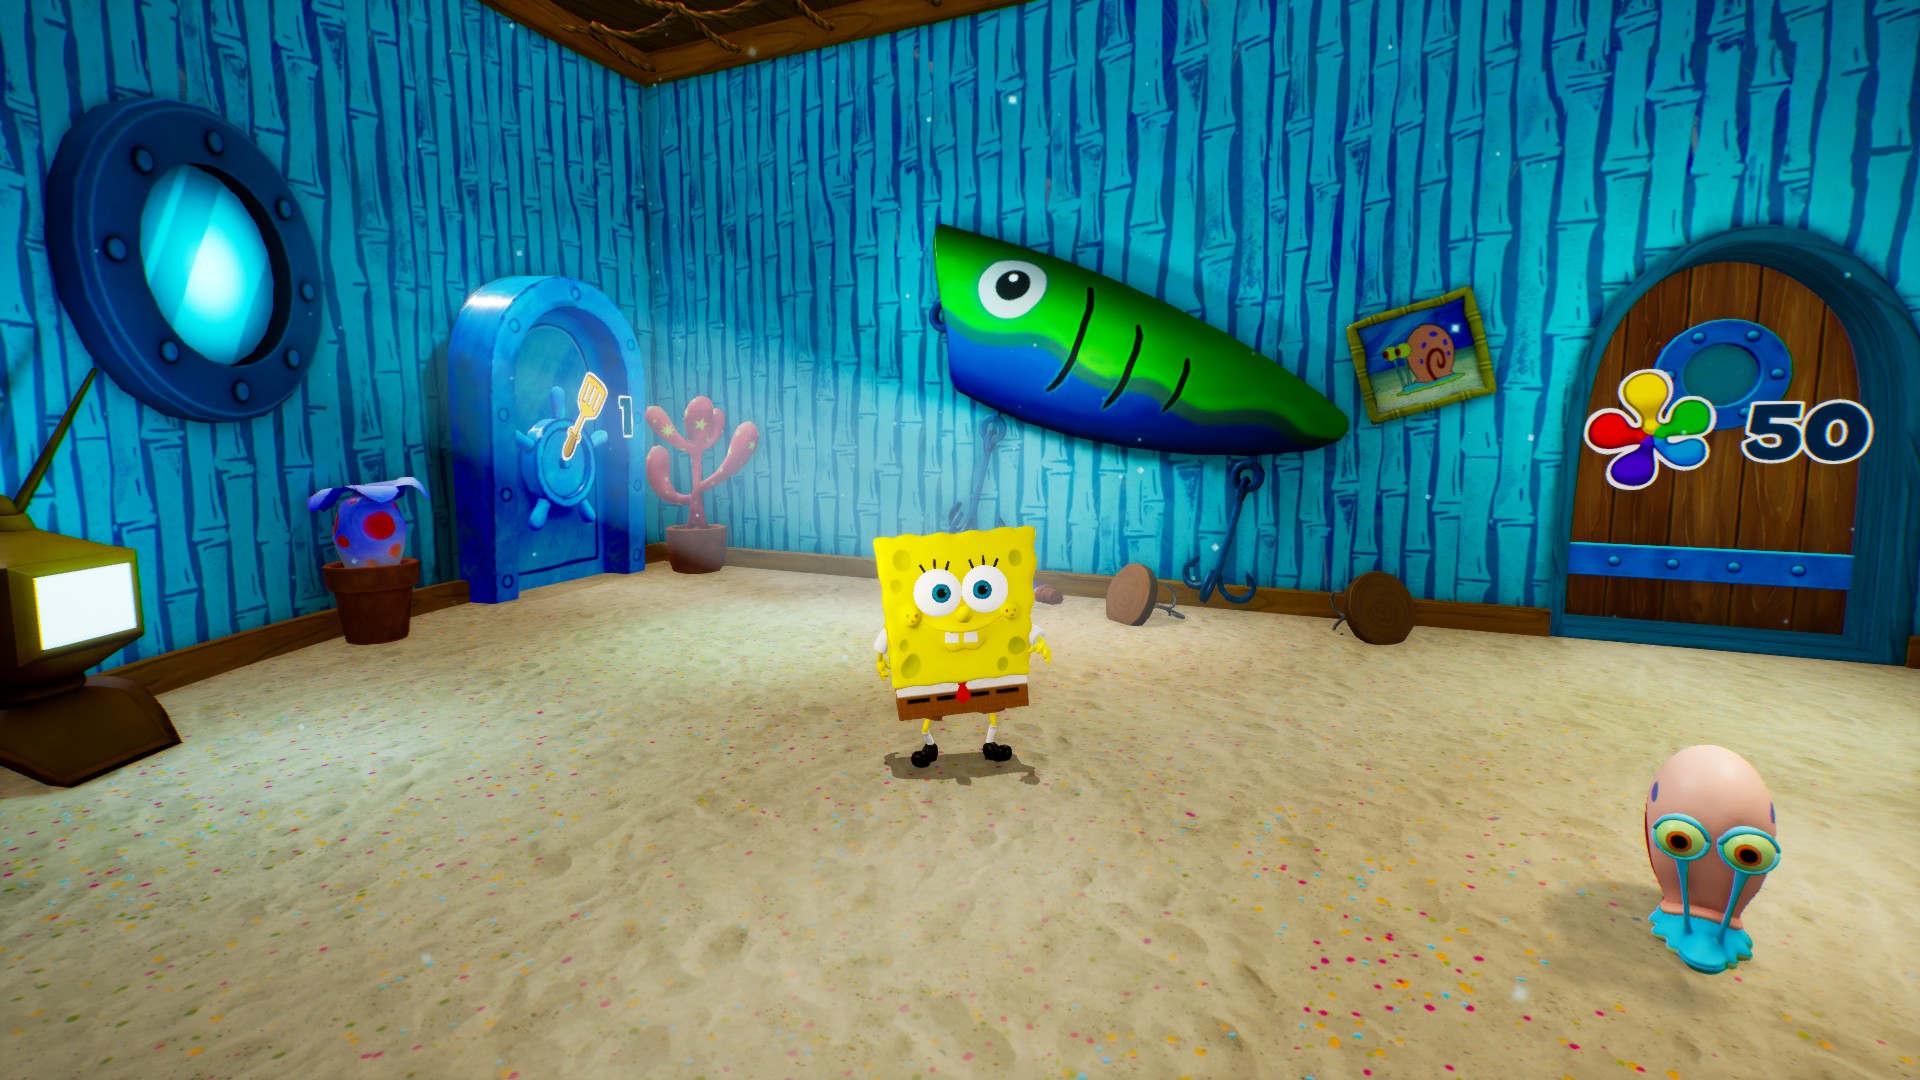 Игры спанч боб бикини боттом. Spongebob Squarepants Battle for Bikini bottom. Spongebob Squarepants игра 2020. Spongebob Battle for Bikini bottom. Губка Боб битва за бикини Боттом 2020.